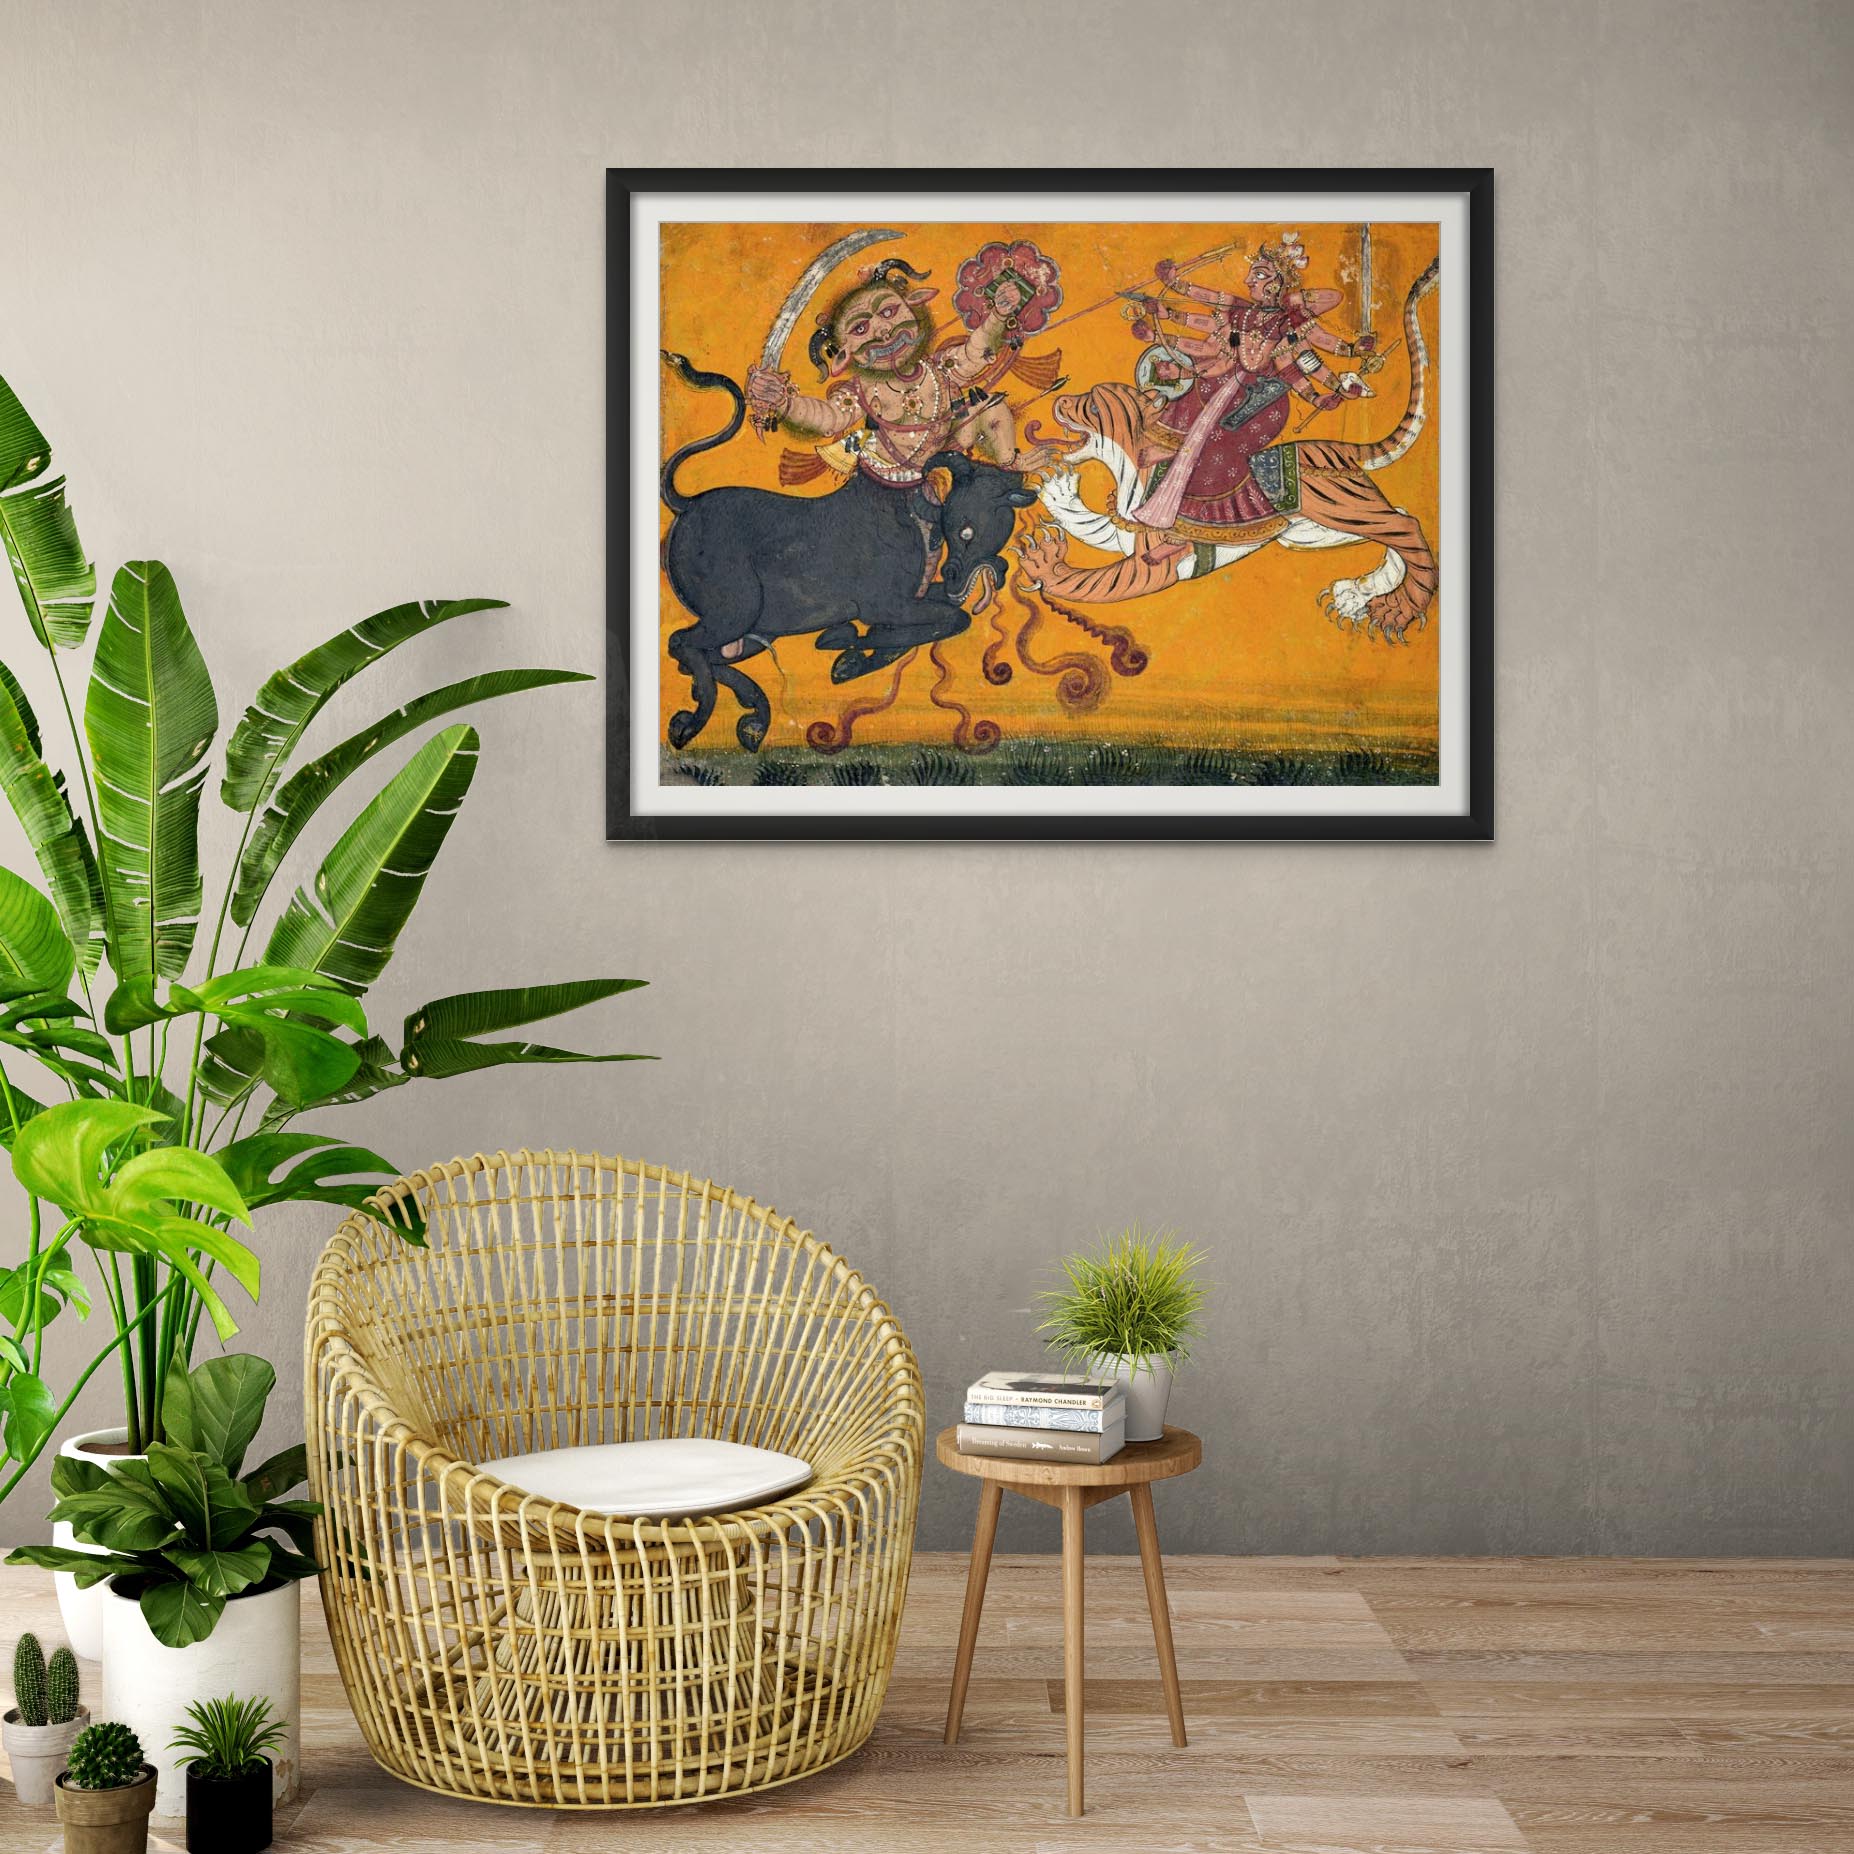 Fine art Durga Slaying Mahisha: Feminine Strength & Empowerment Deity | Powerful Woman Protector Goddess Framed Art Print